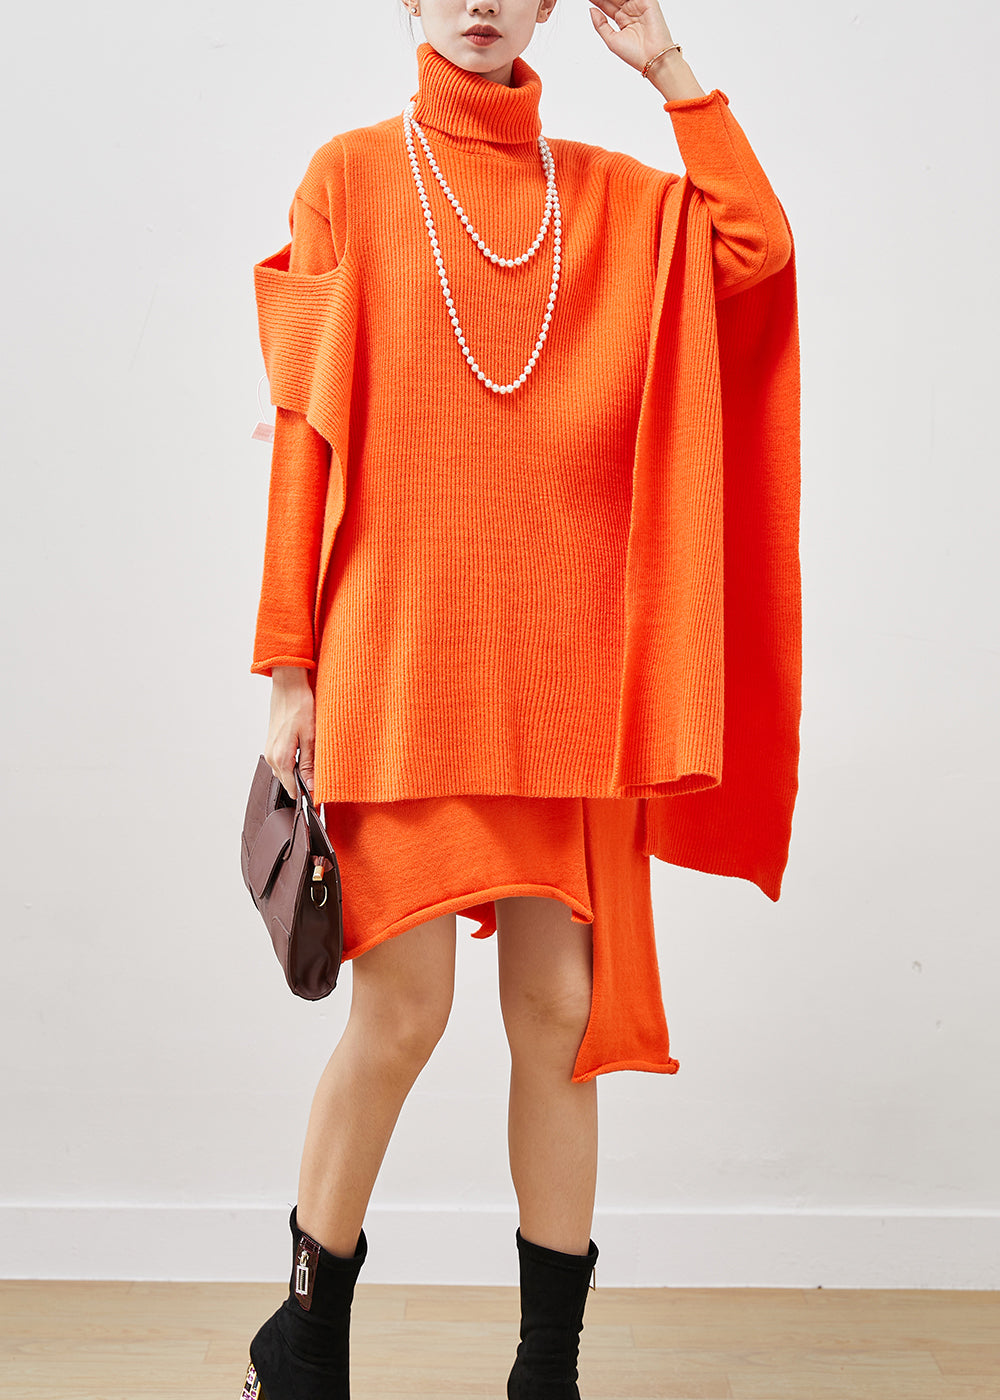 Orange Asymmetrical Knit Dress Two Pieces Set Turtle Neck Spring